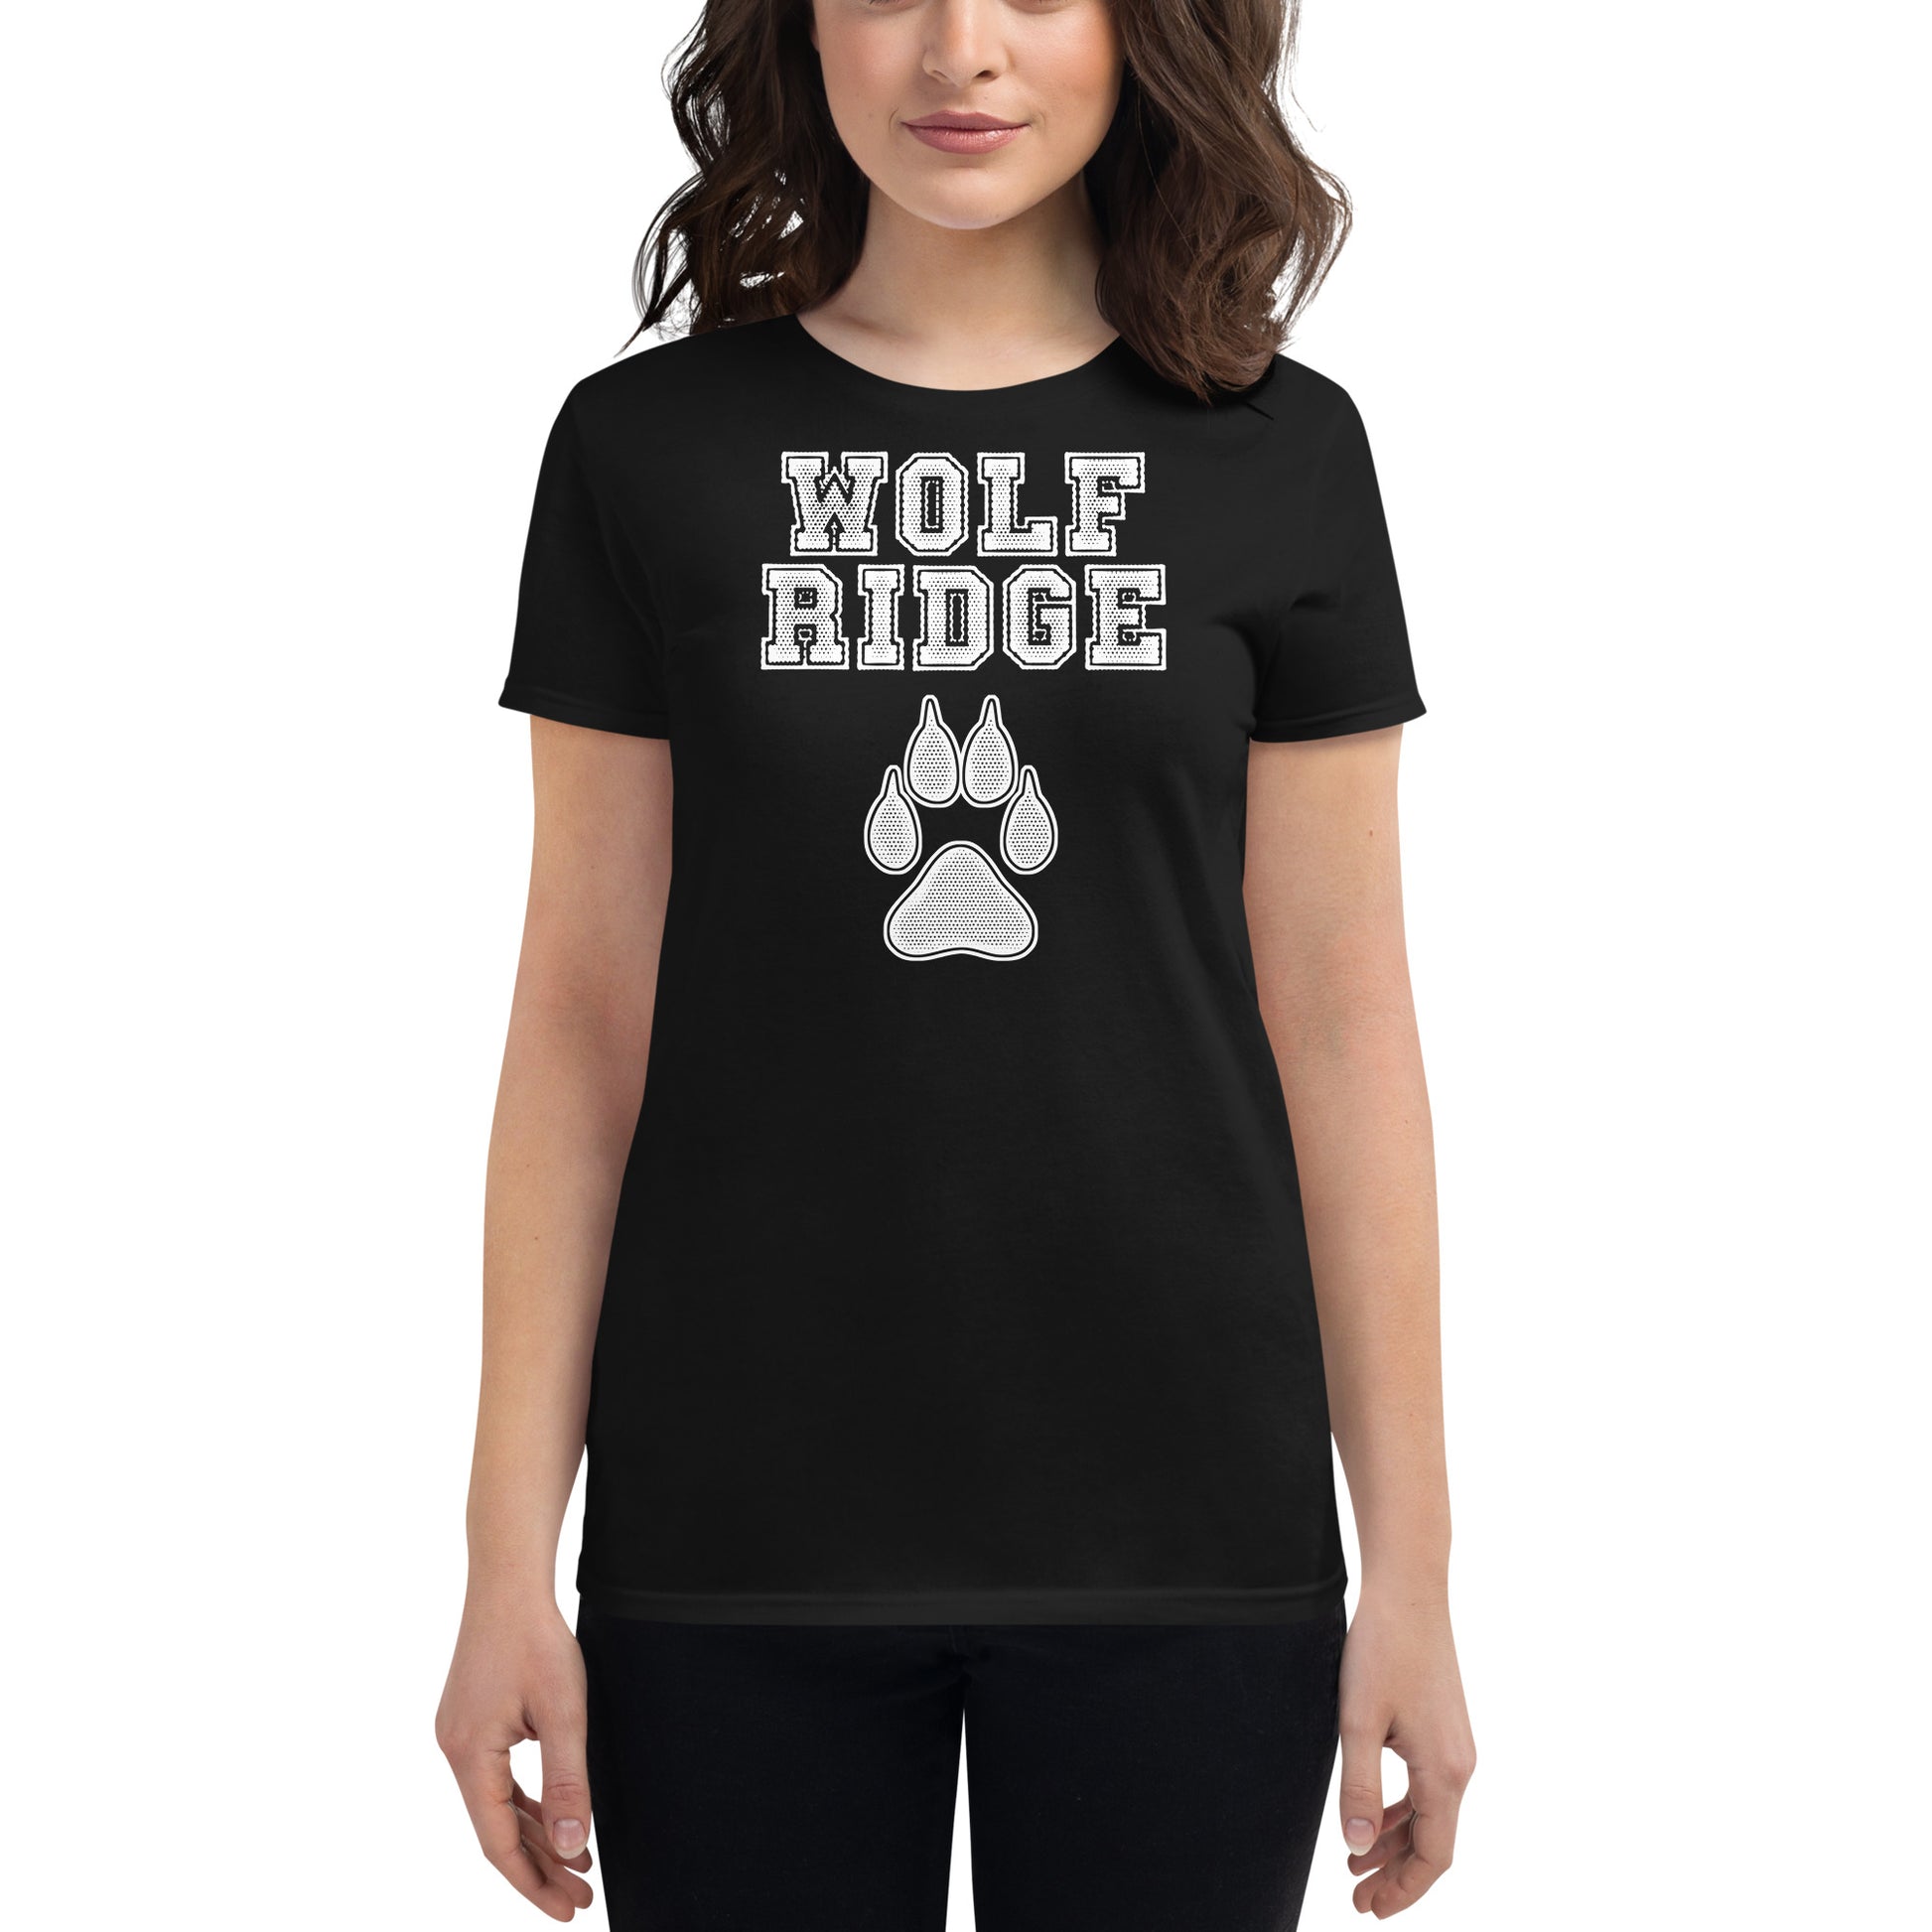 alt girl with wolf ridge tshirt